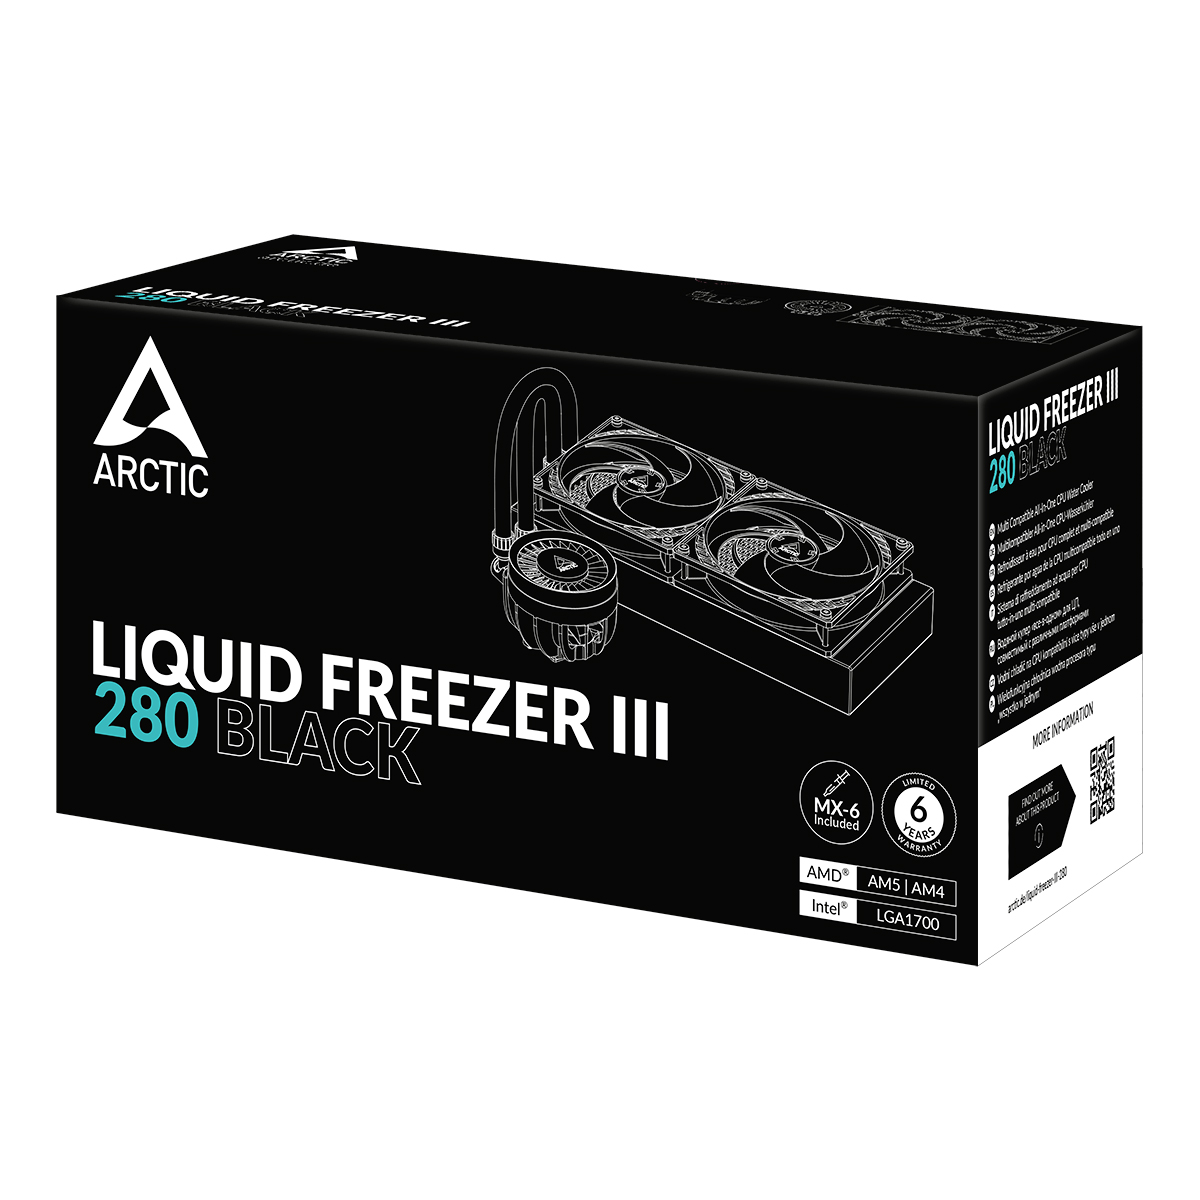 Liquid_Freezer_III_280_Black_G06